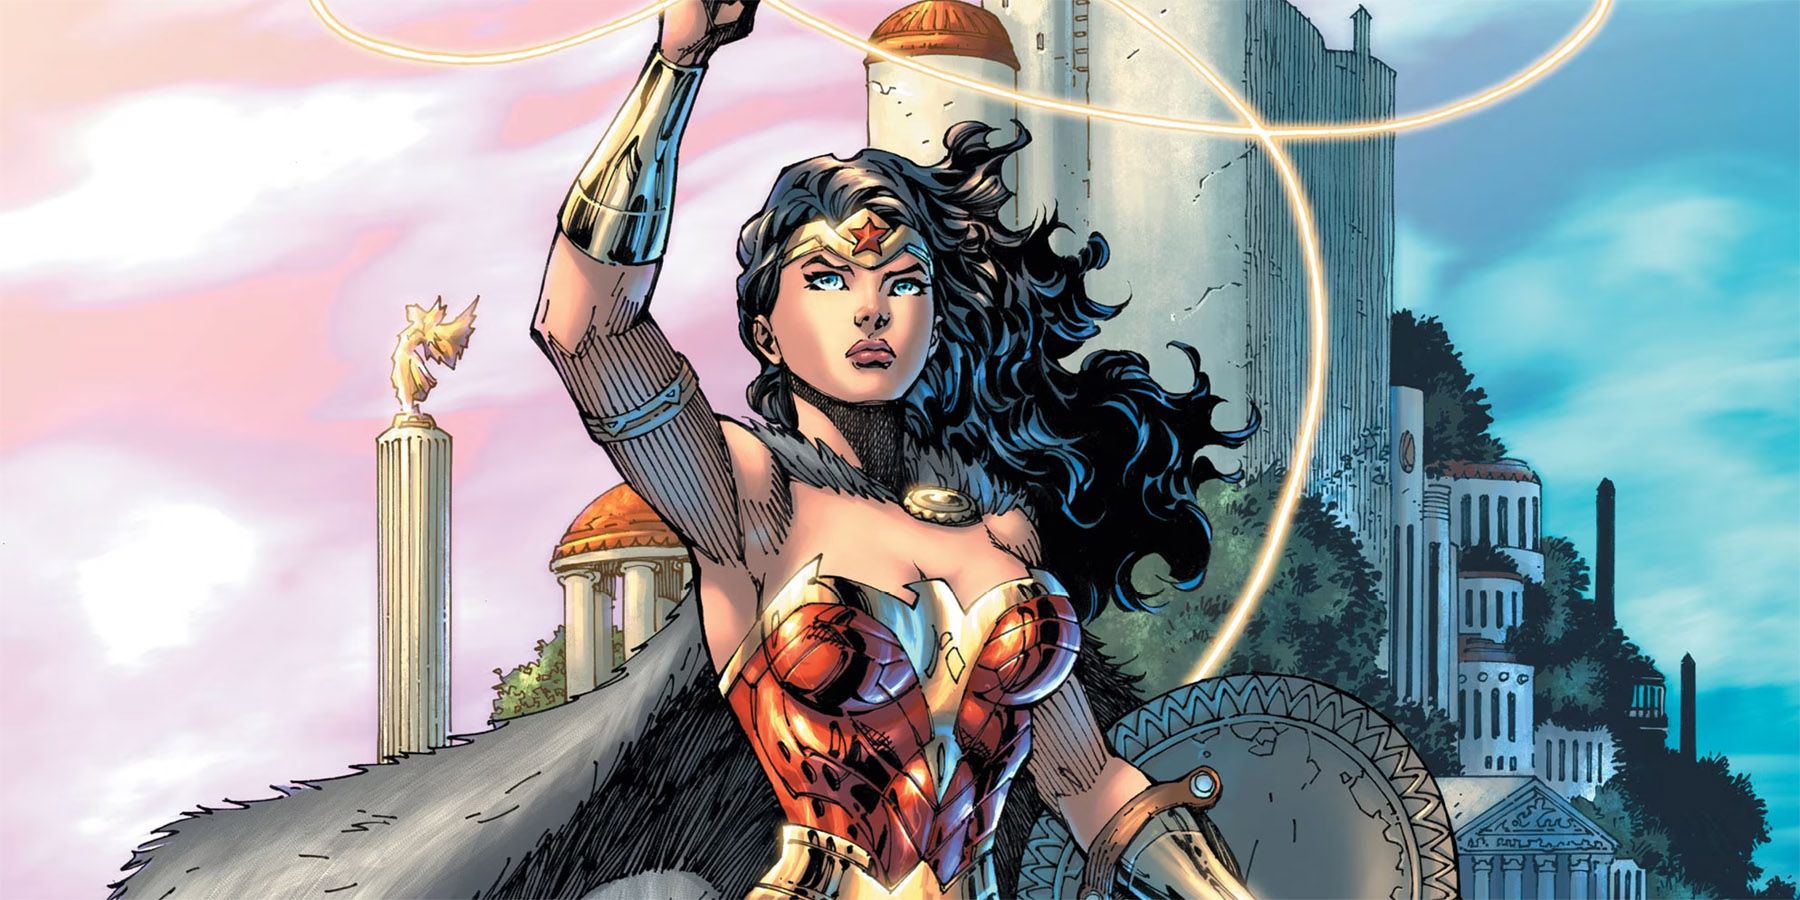 Wonder Woman #1 Reprint Cover by Jim Lee, Scott Williams, and Alex Sinclair